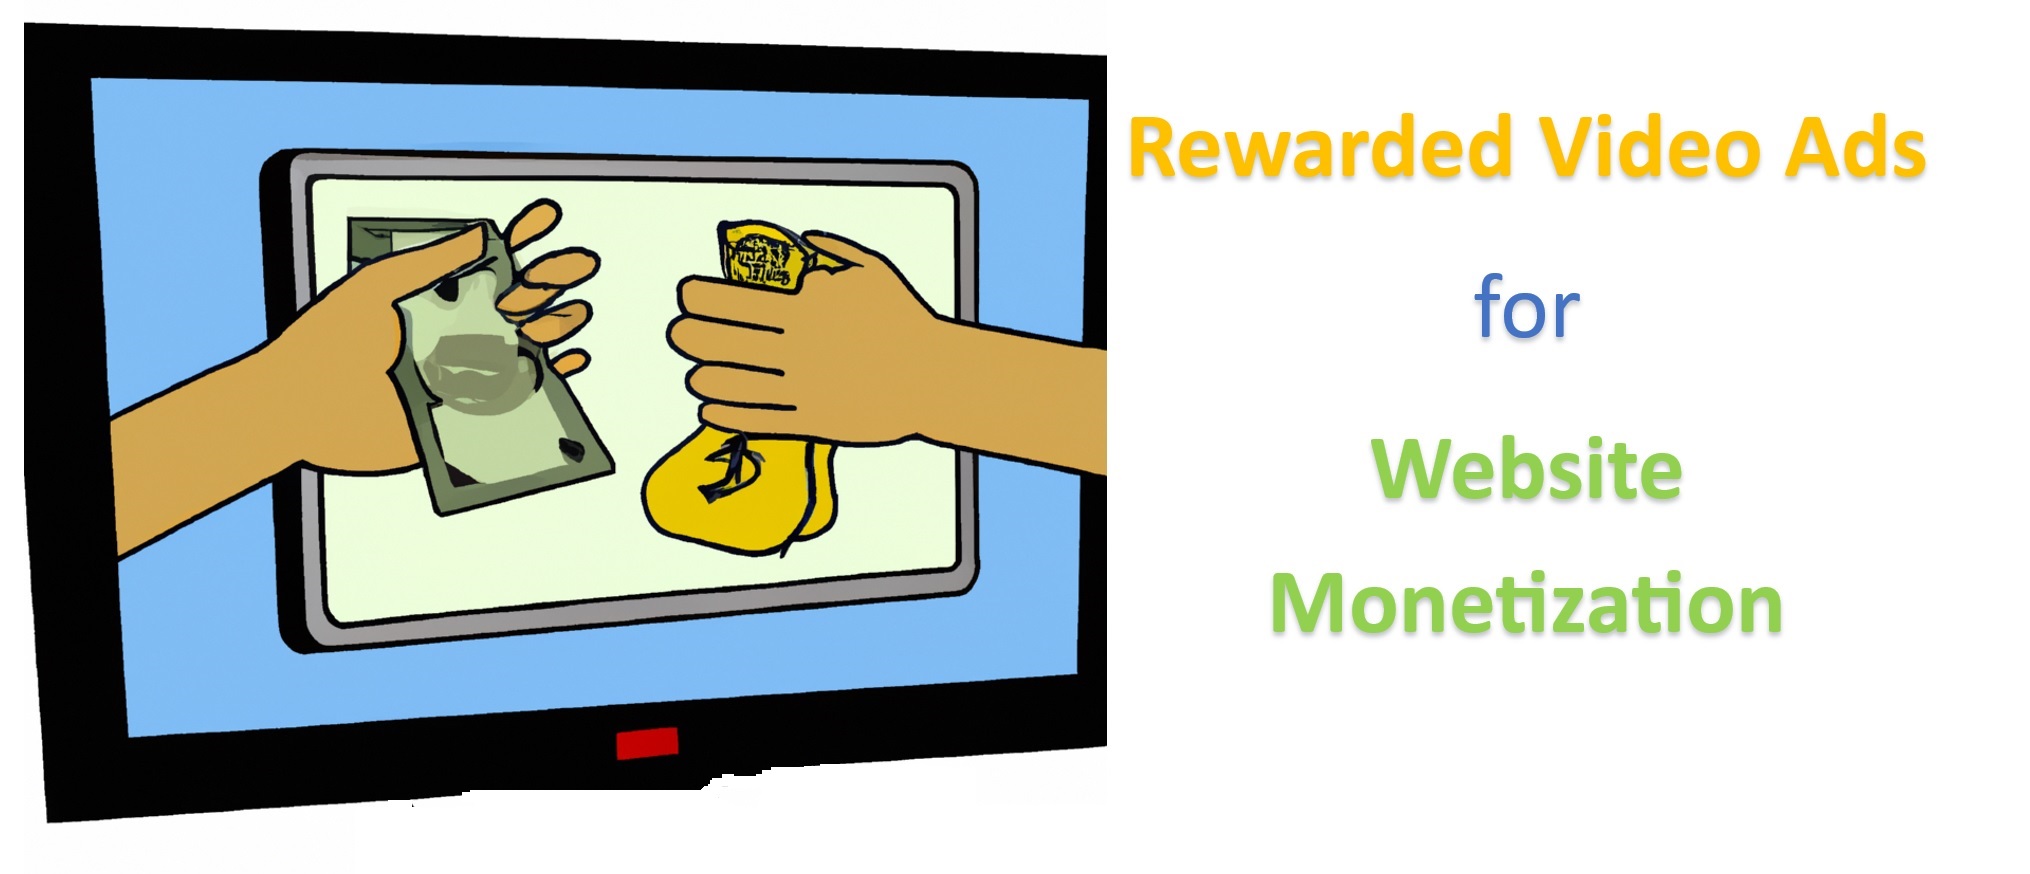 Rewarded Video Ads for Website Monetization